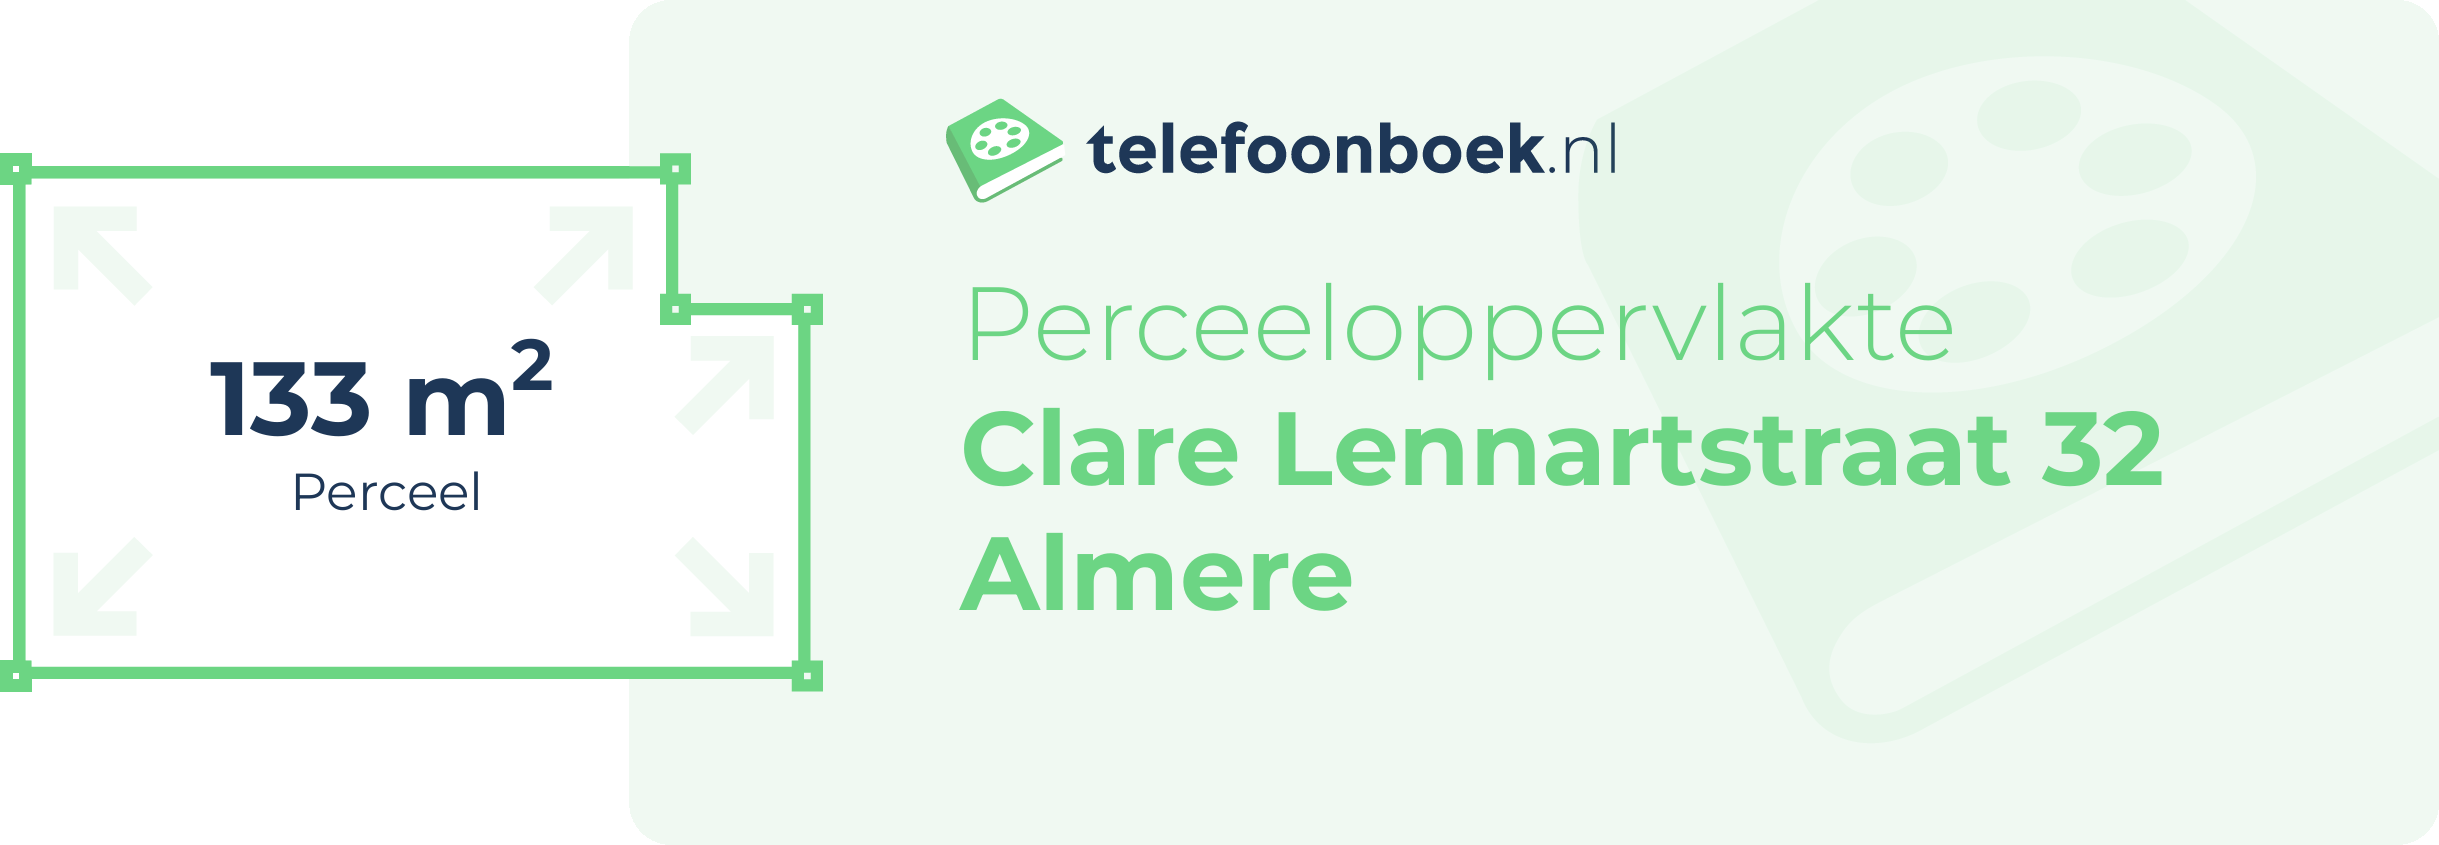 Perceeloppervlakte Clare Lennartstraat 32 Almere